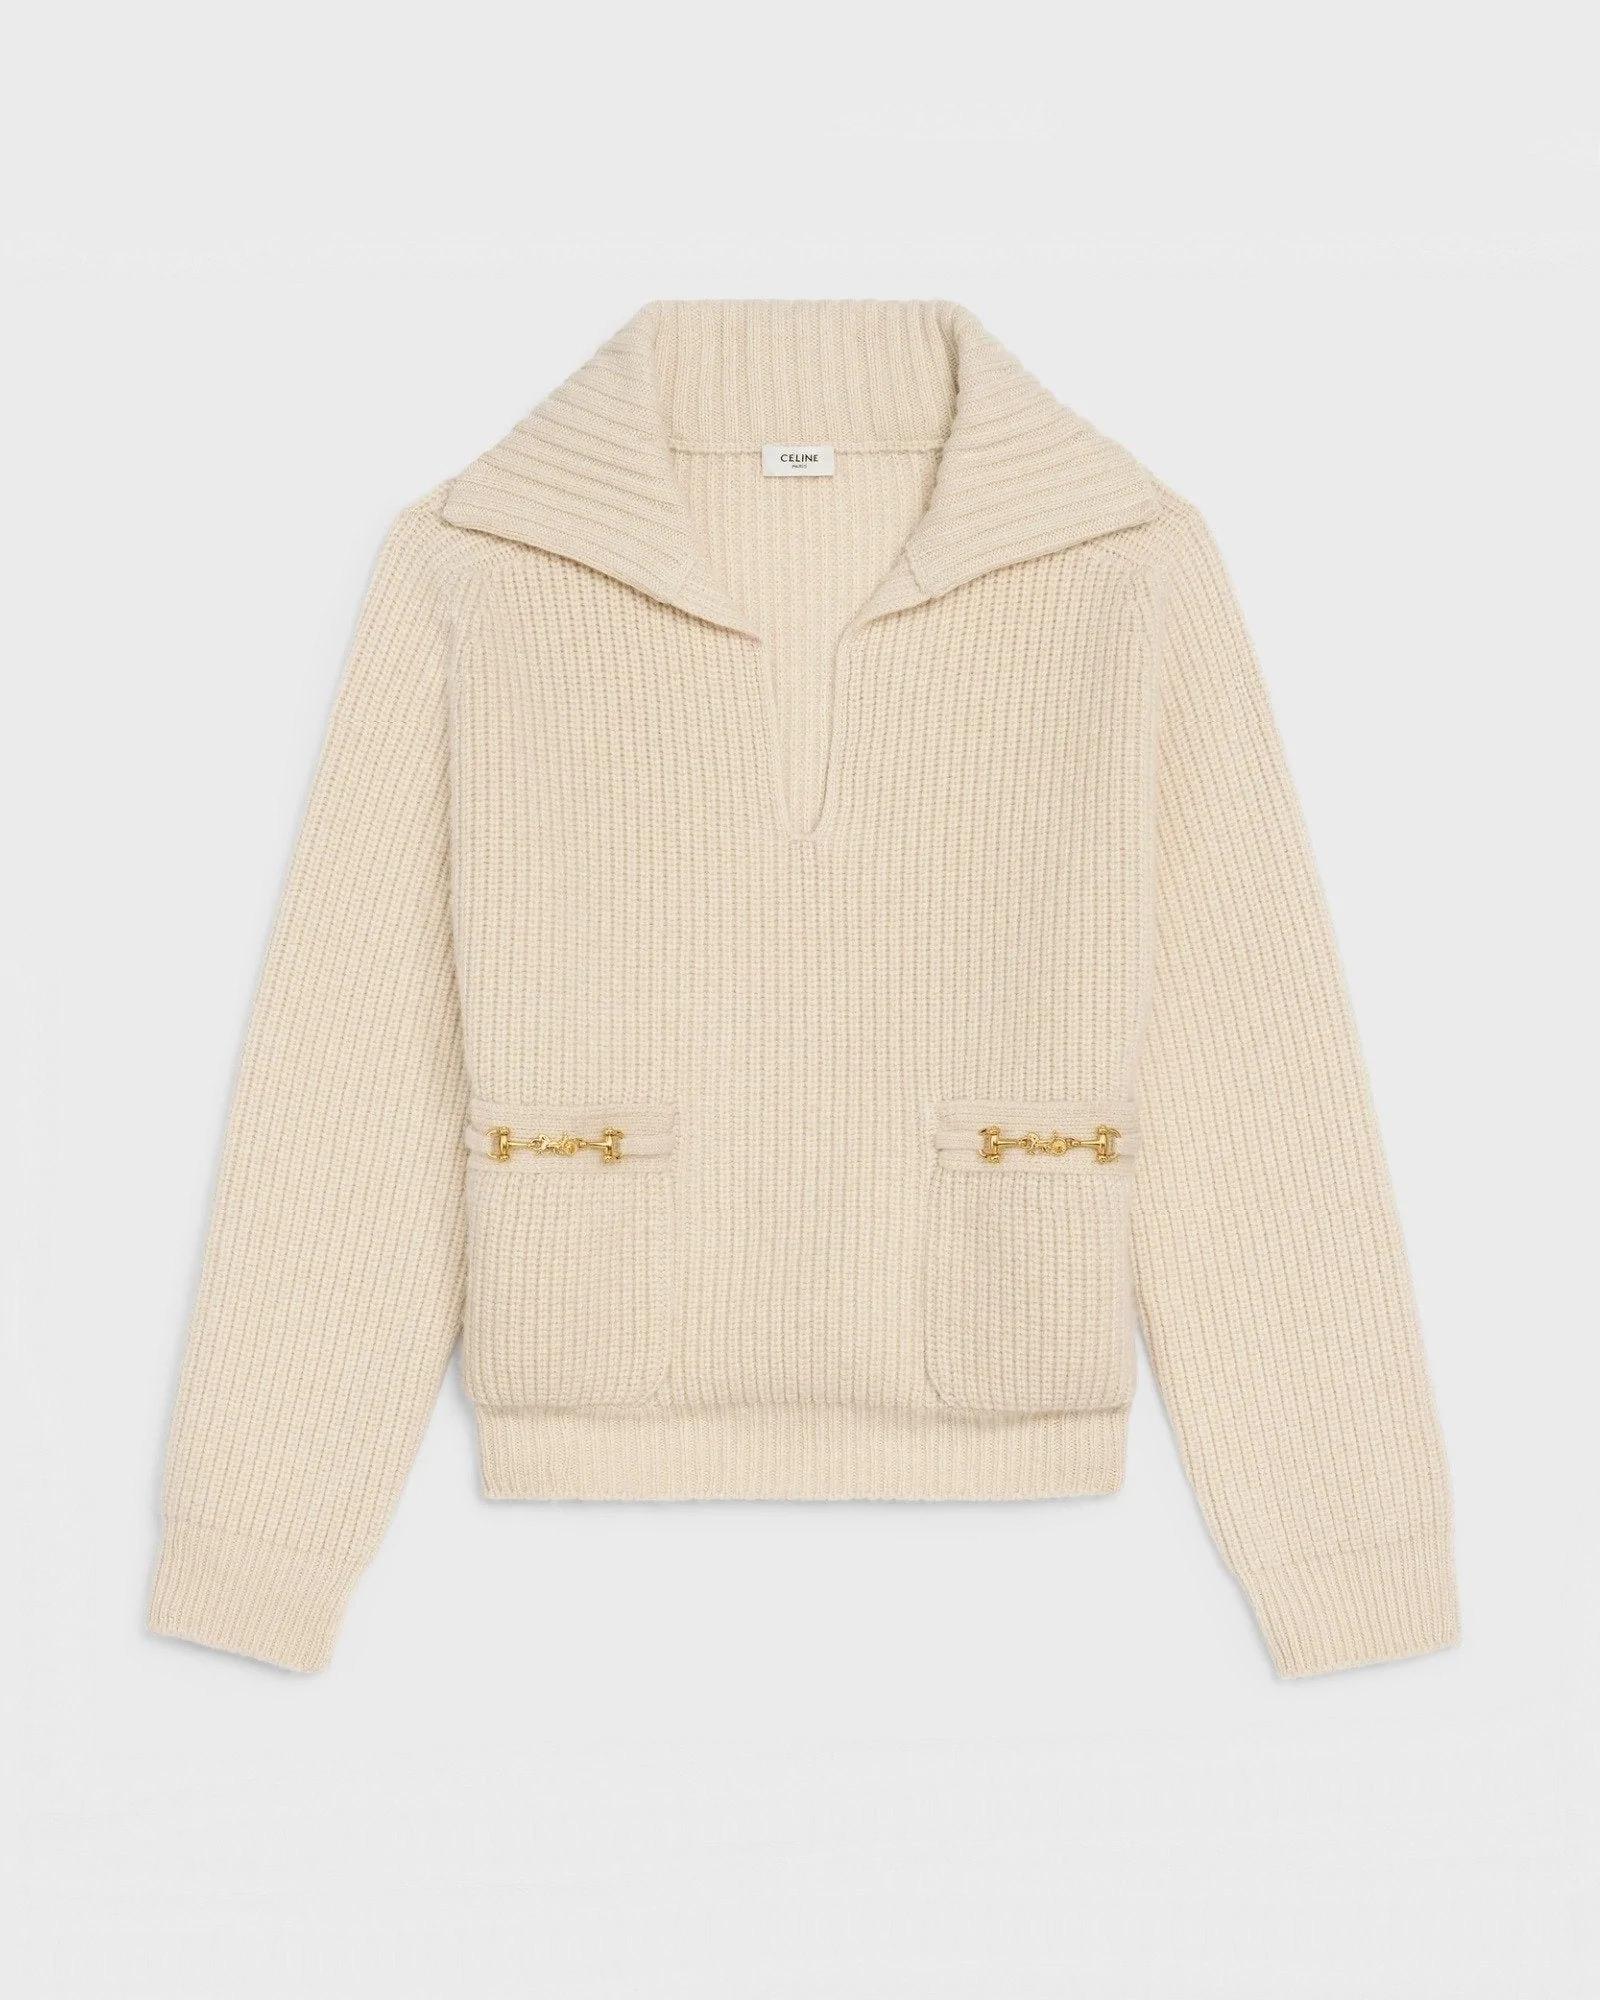 Celine Open-Collar Sweater In Seamless Cashmere Cream